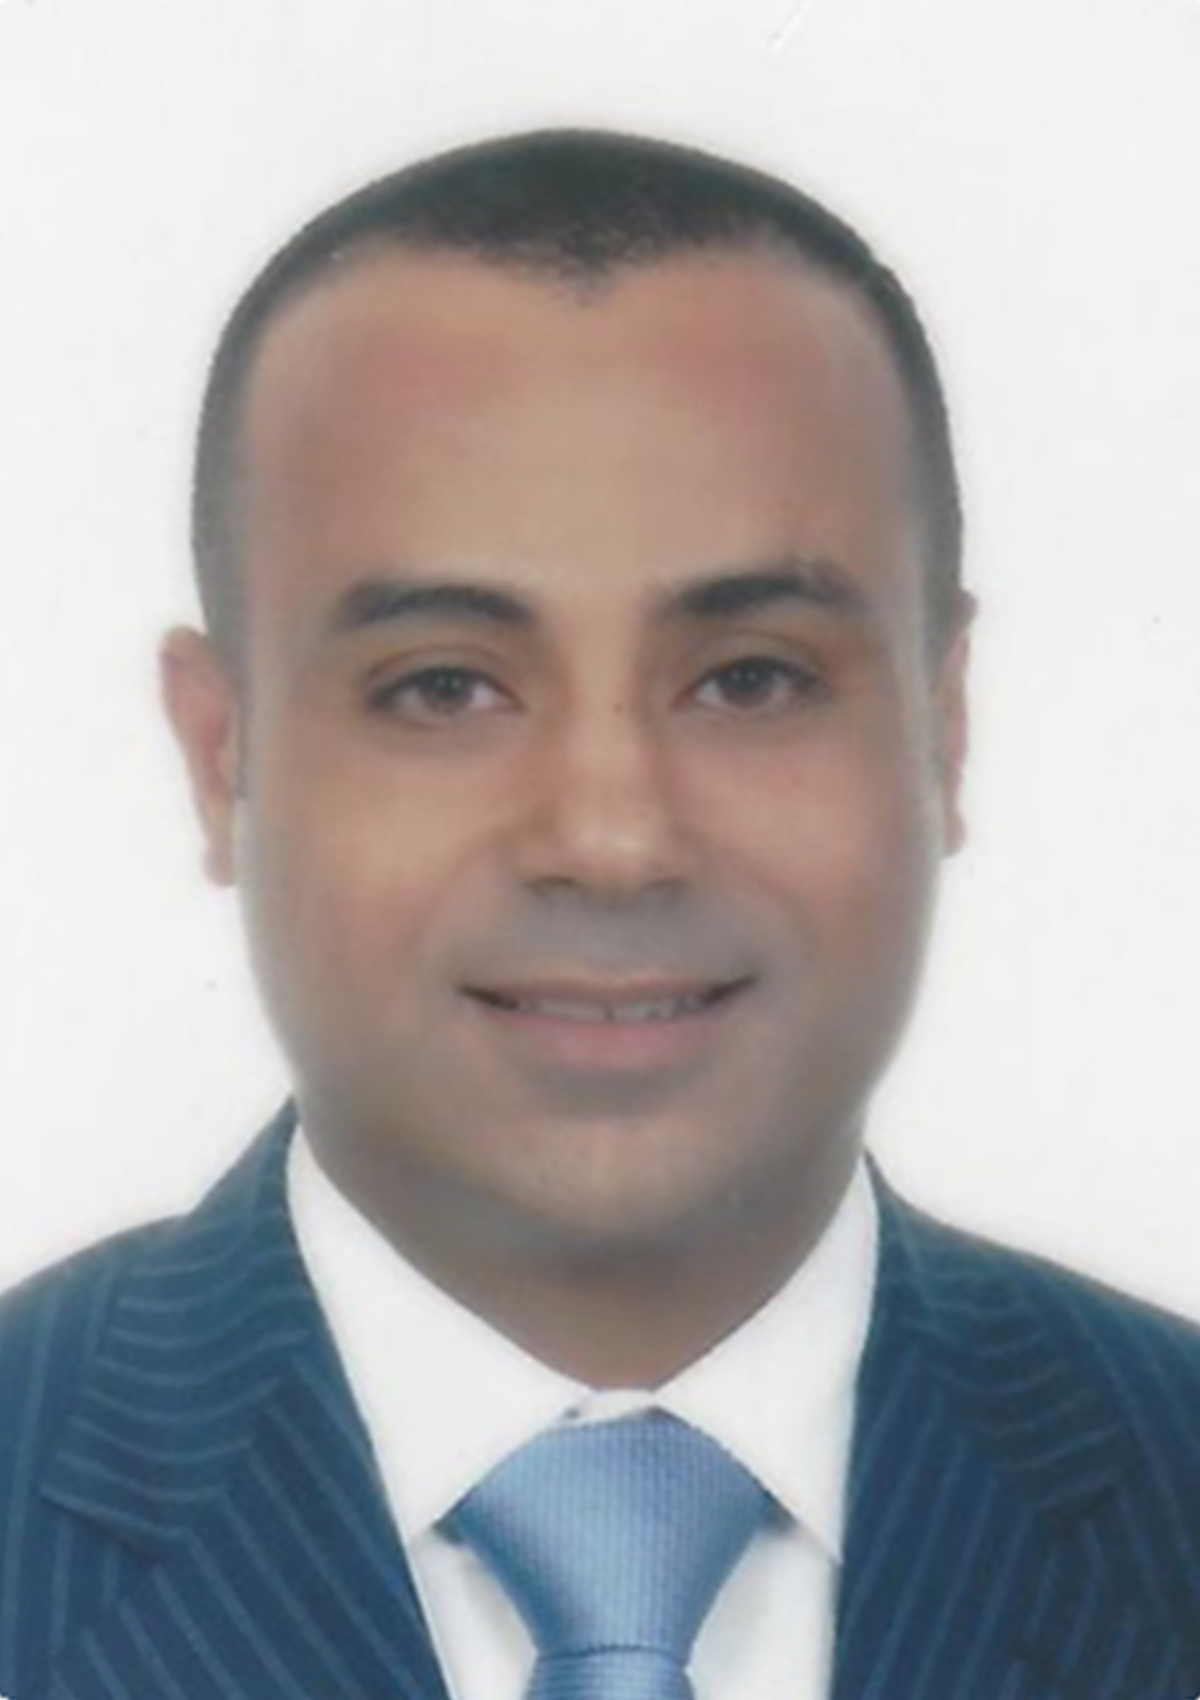 Mr. Husam Mohammed El-Sayed Hussein